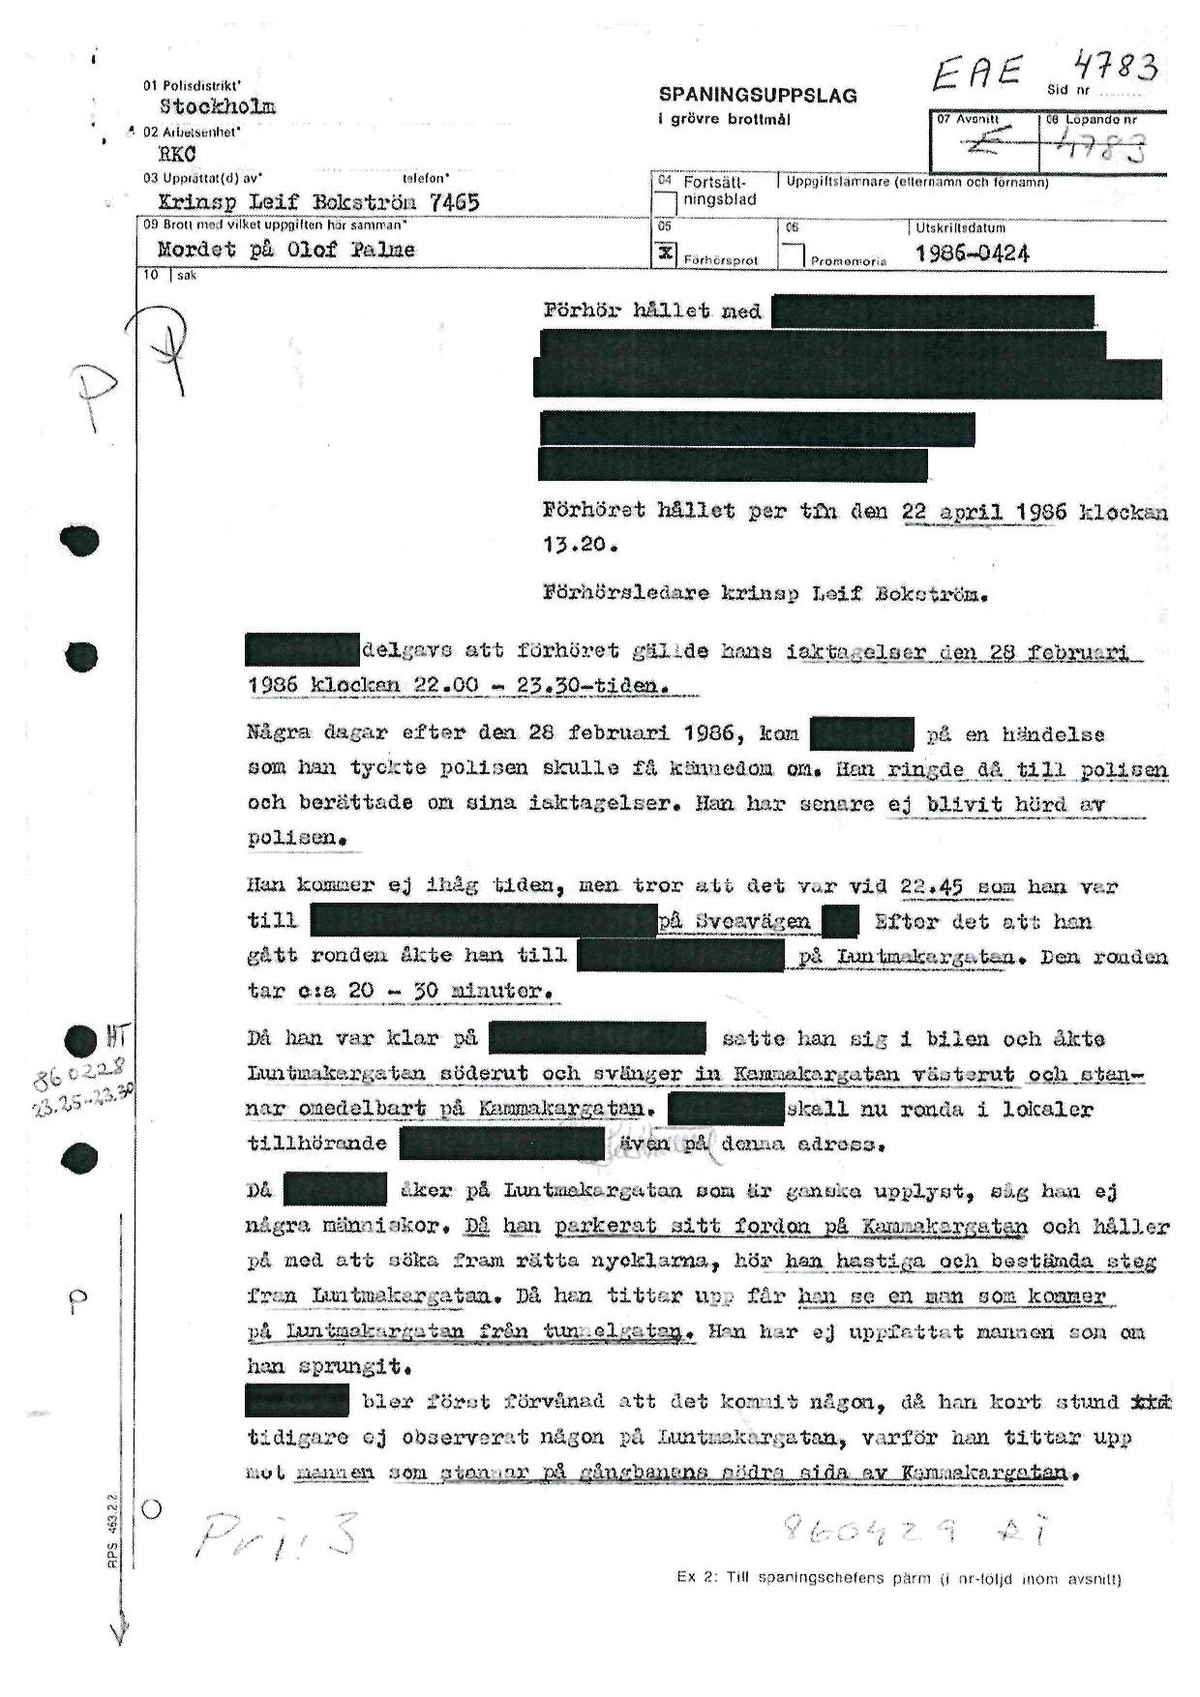 Pol-1986-04-22 1320 E4783-00 Väktare ser man på Luntmakargatan.pdf